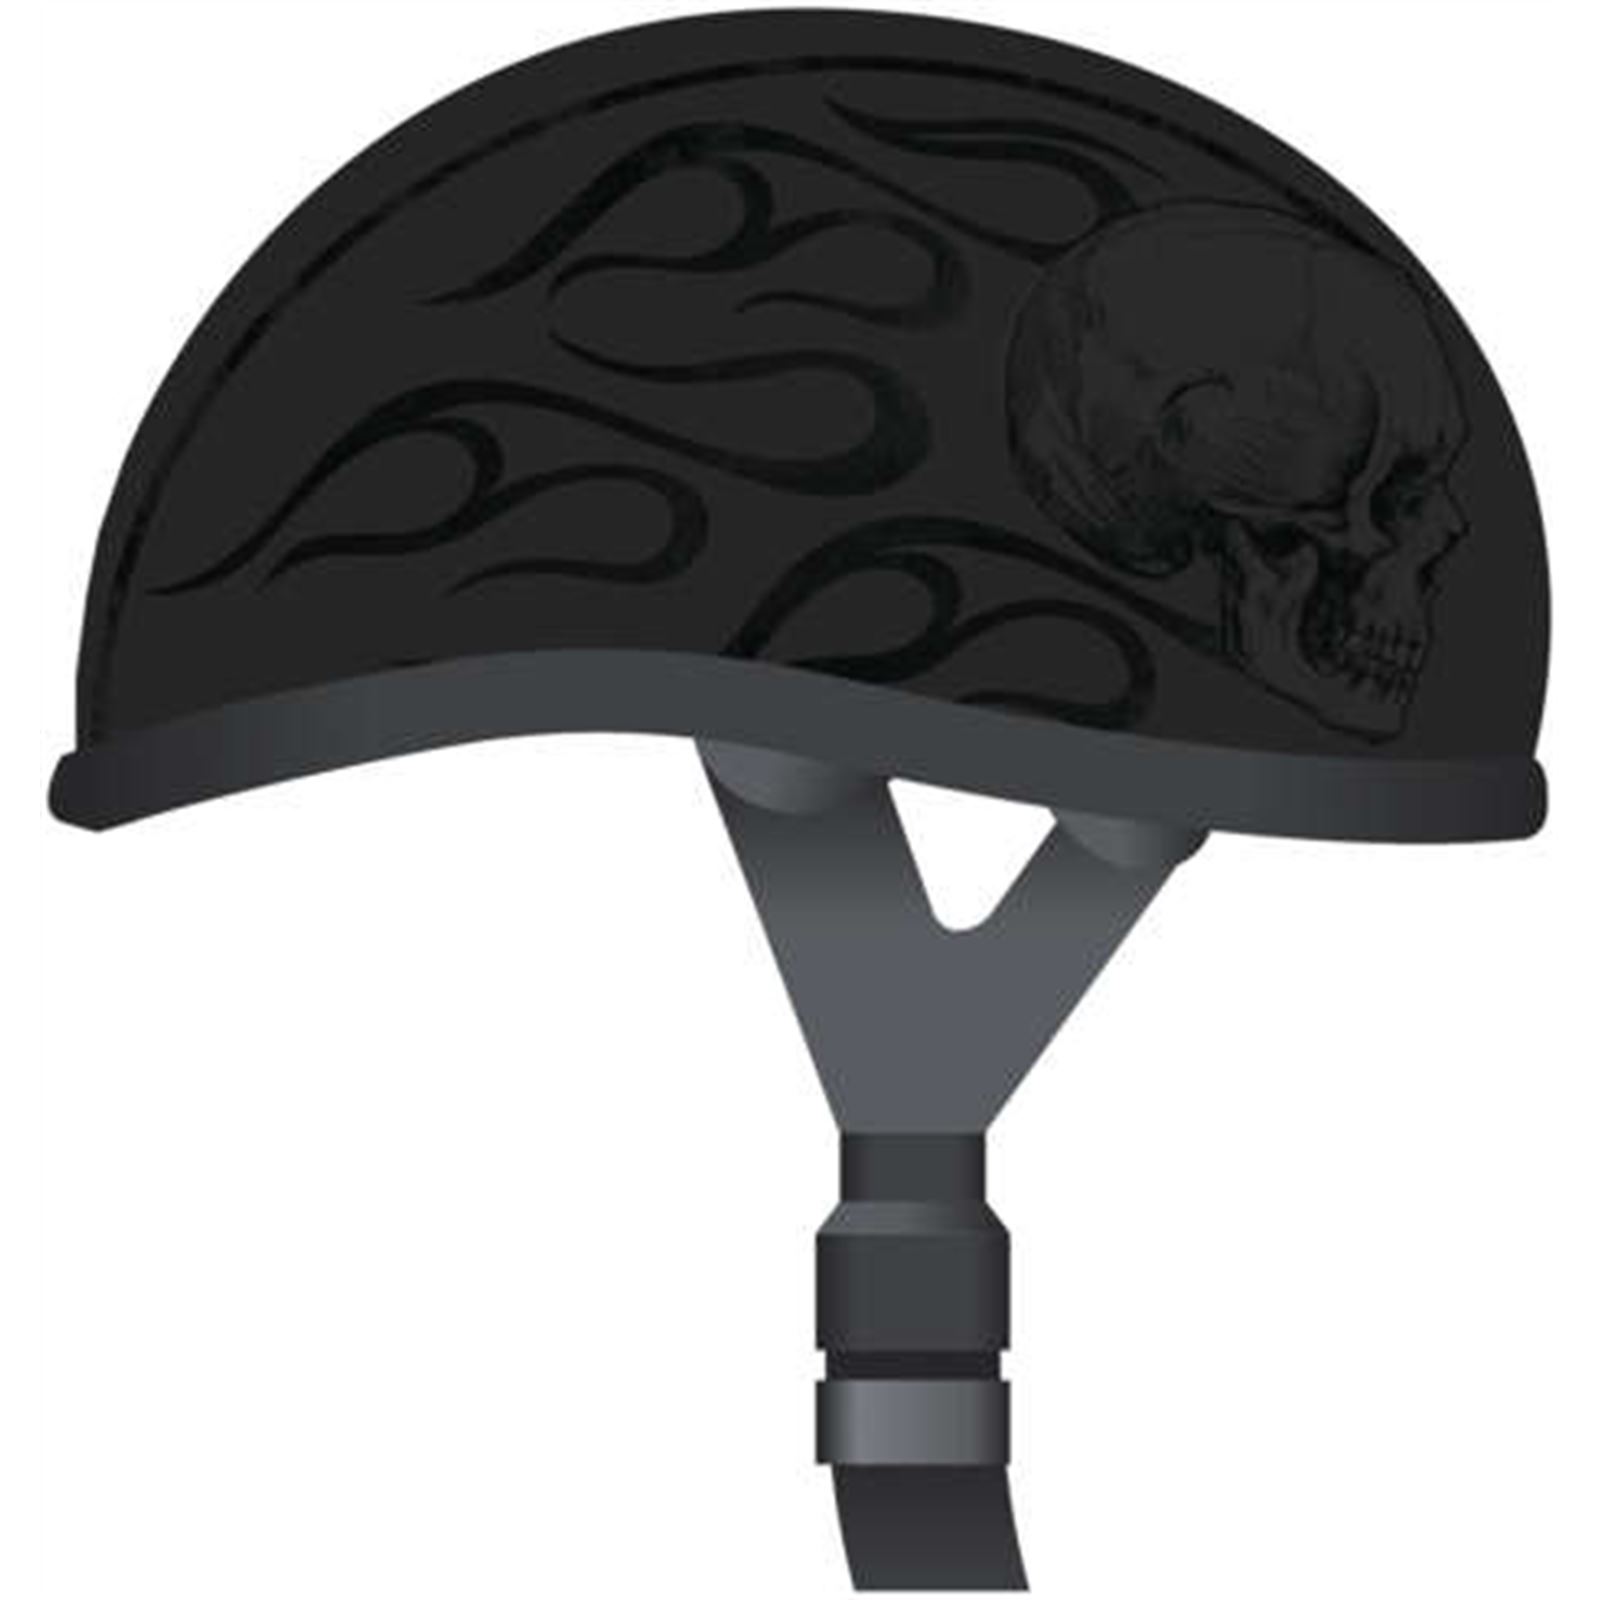 Skid Lid Helmets Original Ghost Skull Flames Helmet - Black - Small